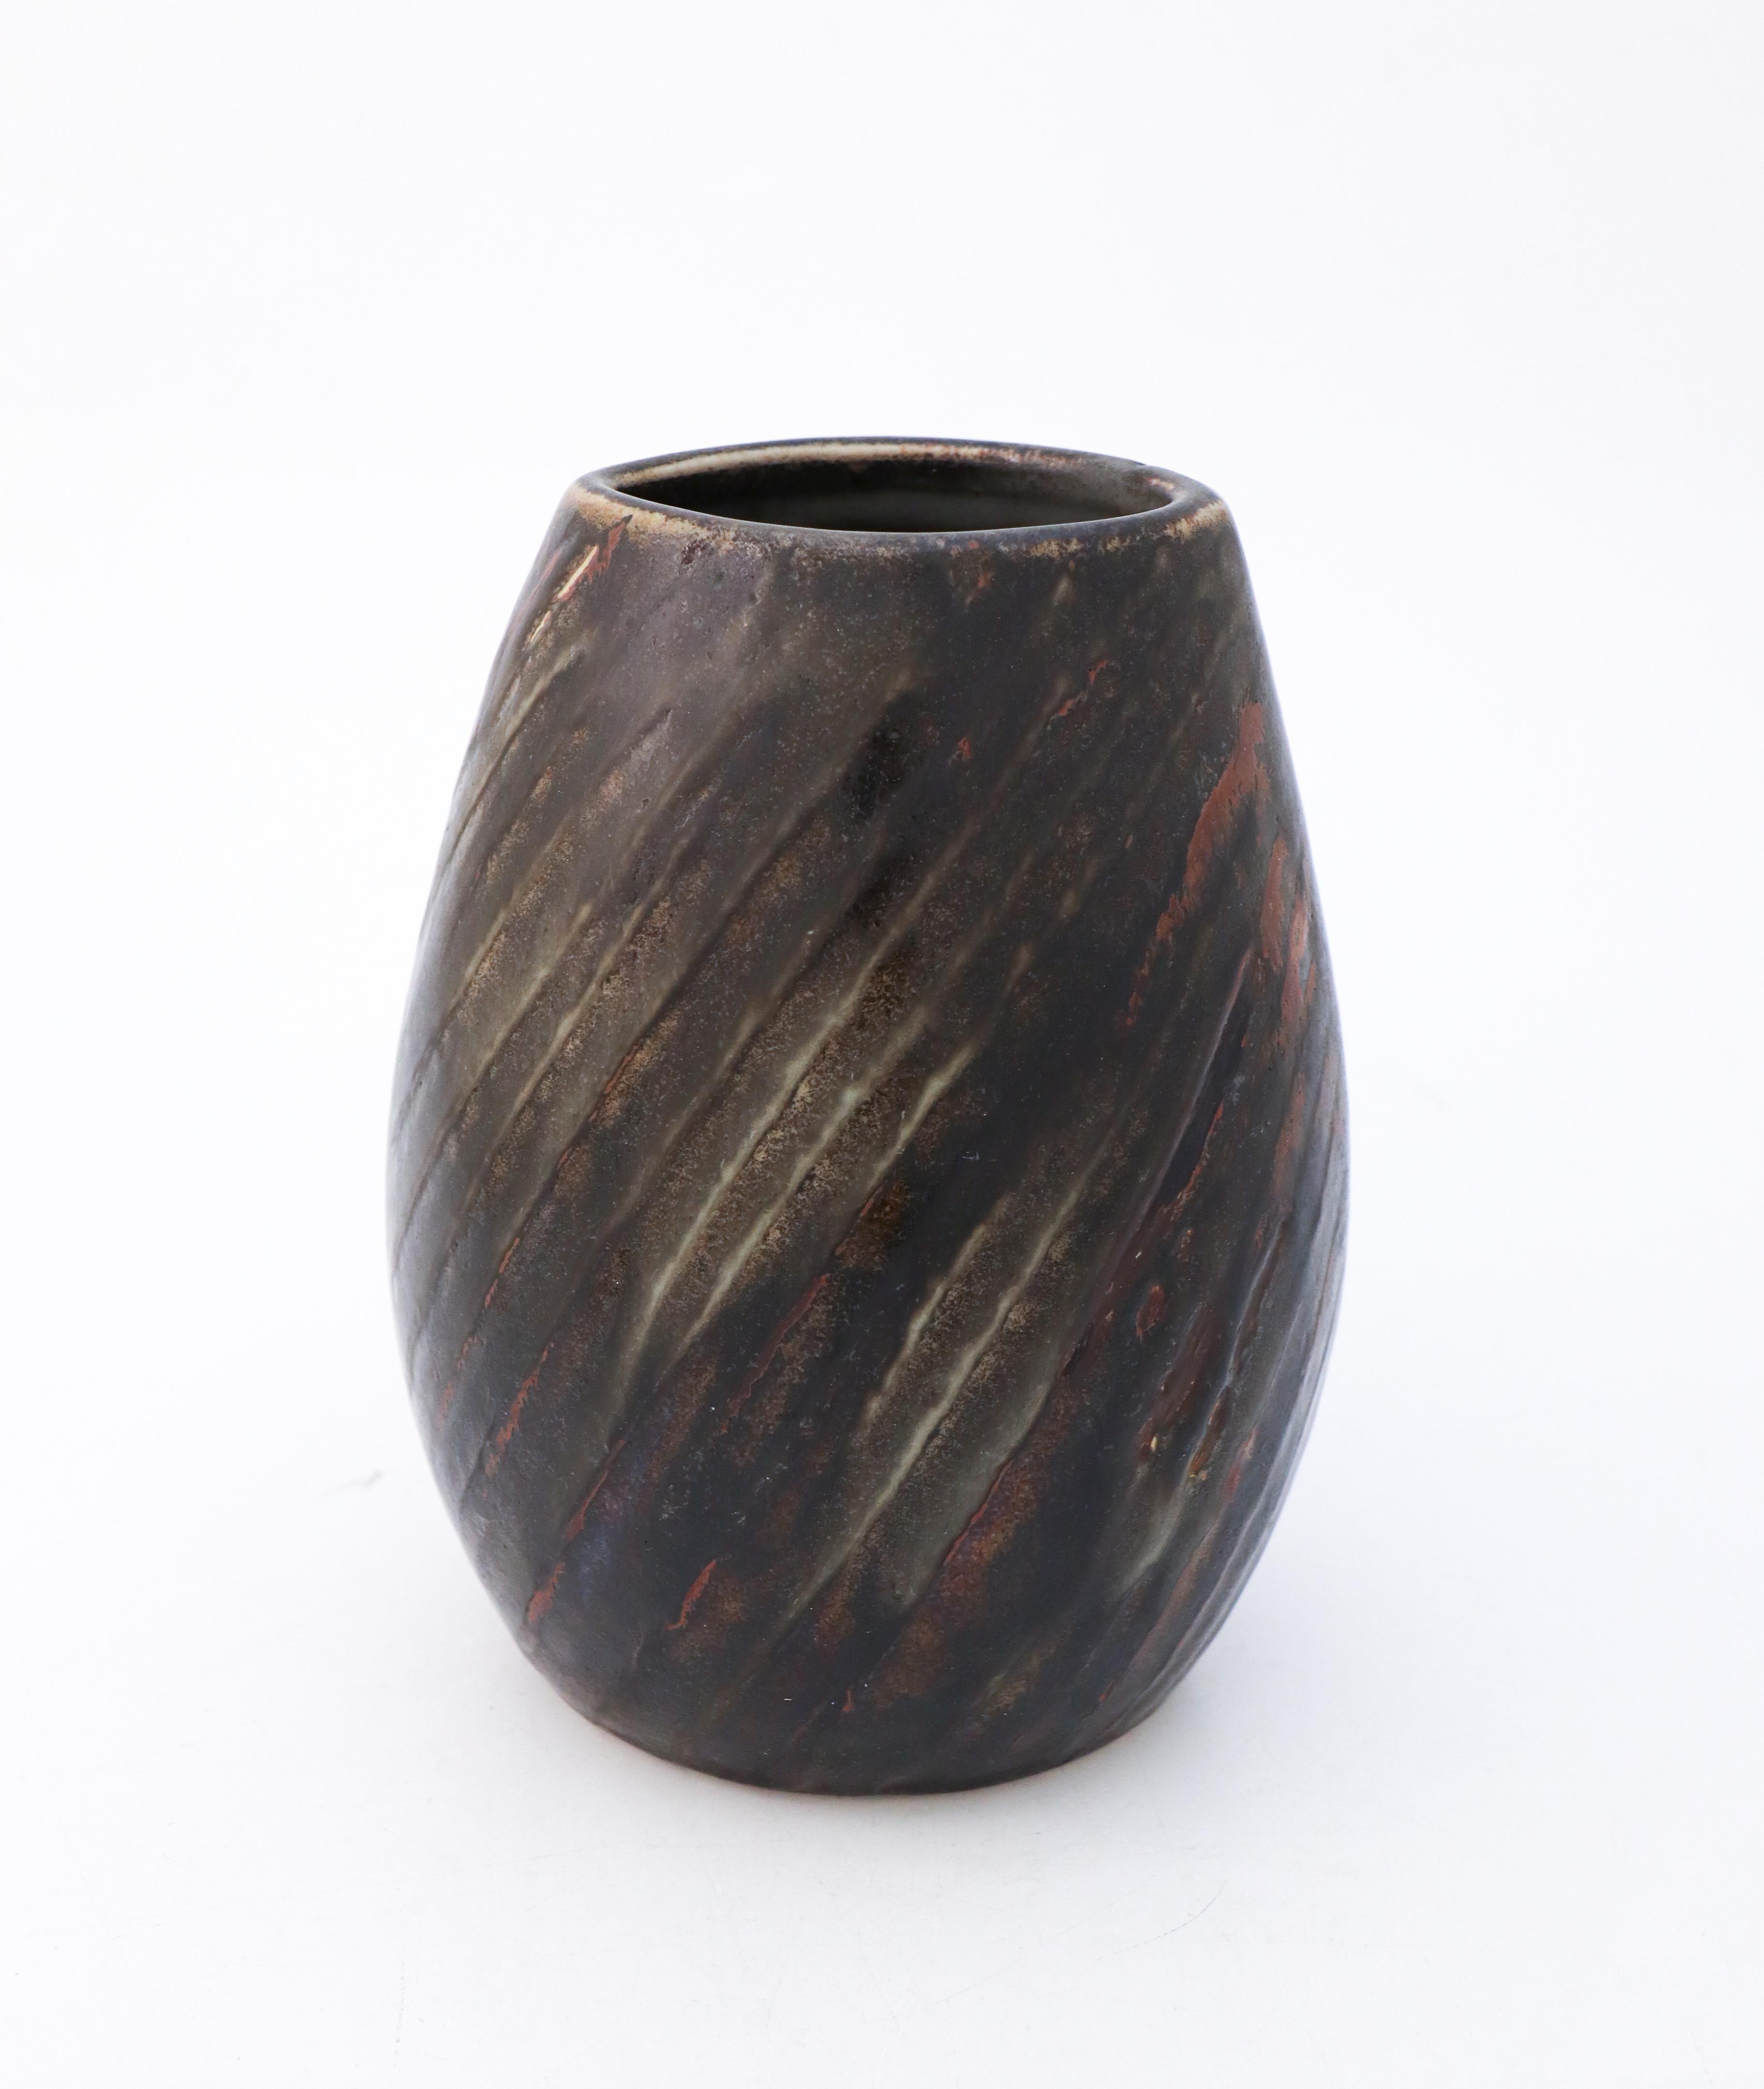 A black & brown vase designed by Carl-Harry Stålhane at Rörstrand atelier, It is 21 cm (8.4